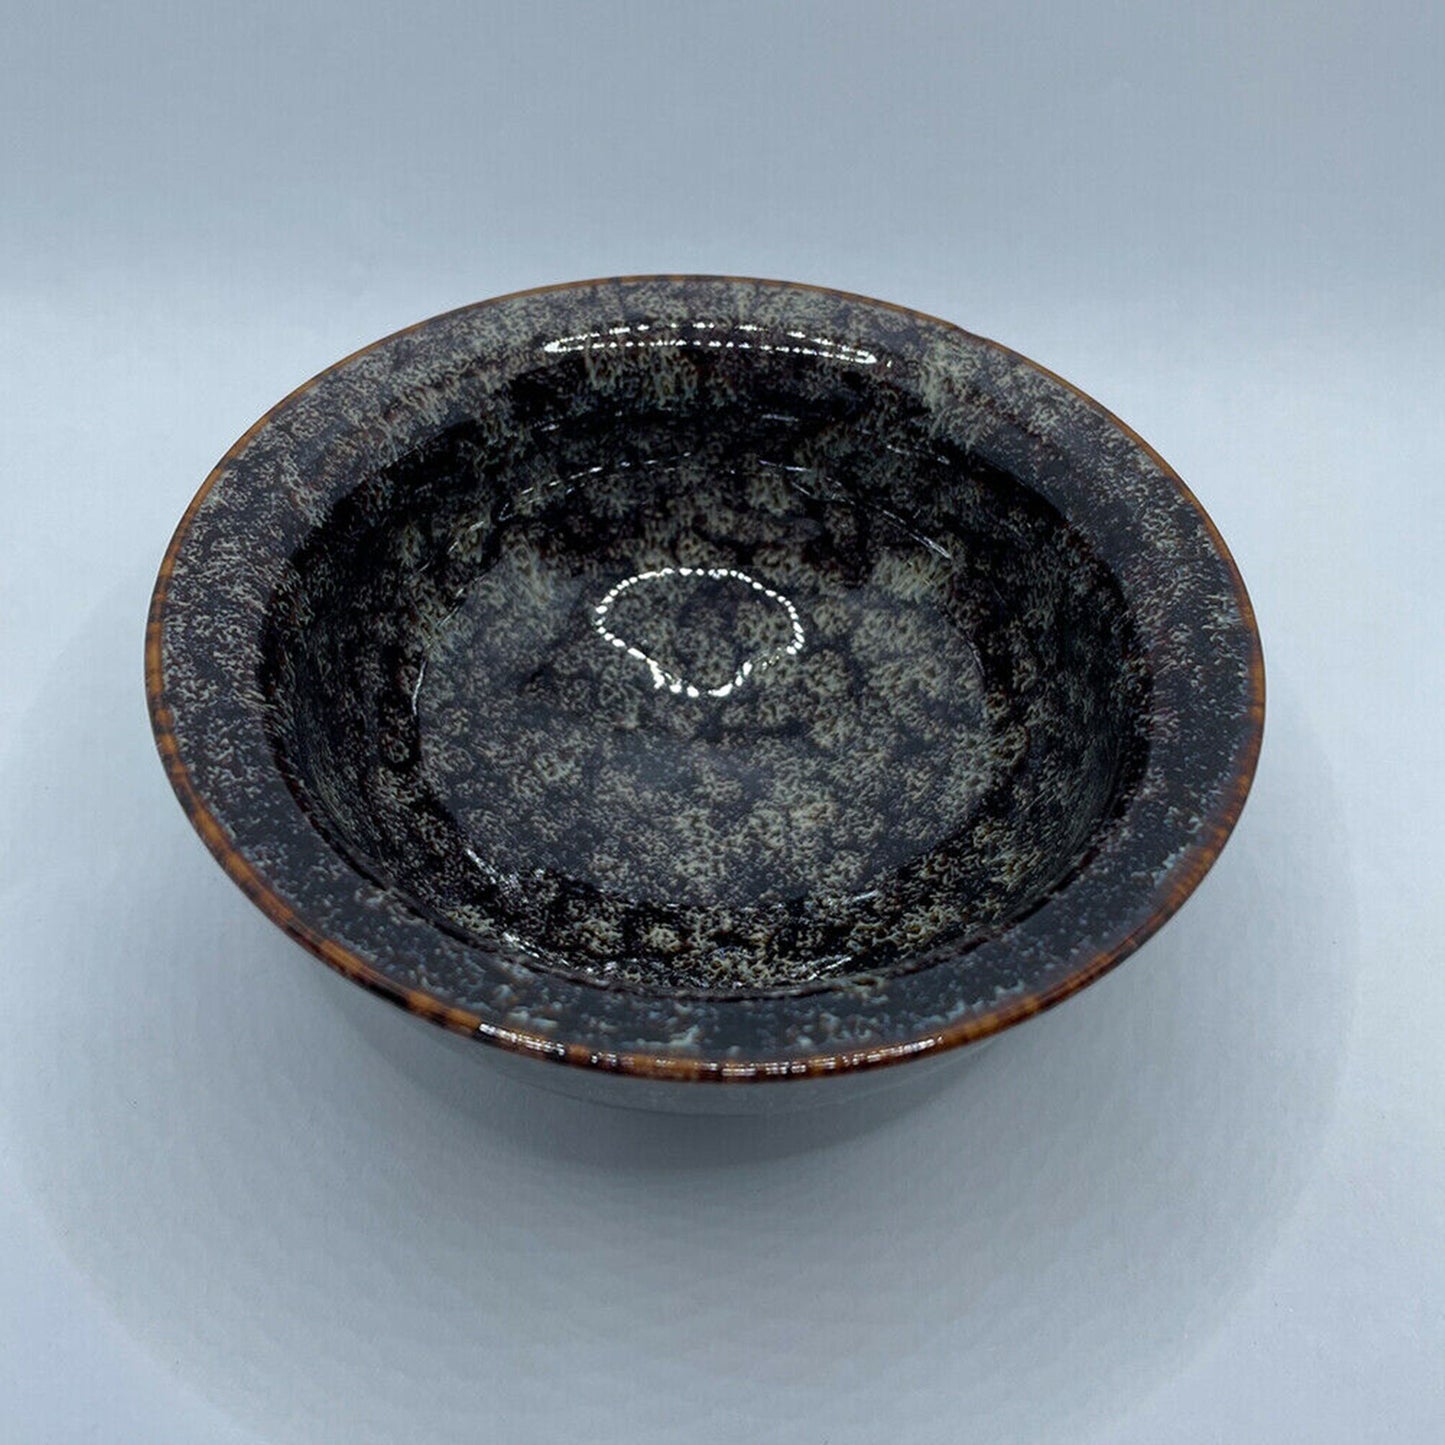 005 JianZhan Chinese Tea Cups  Handcrafted Tenmoku Tea Cup Ceramic Teacup Mug matcha Tenmoku bowl Crafts Collection|Father's Day Gift